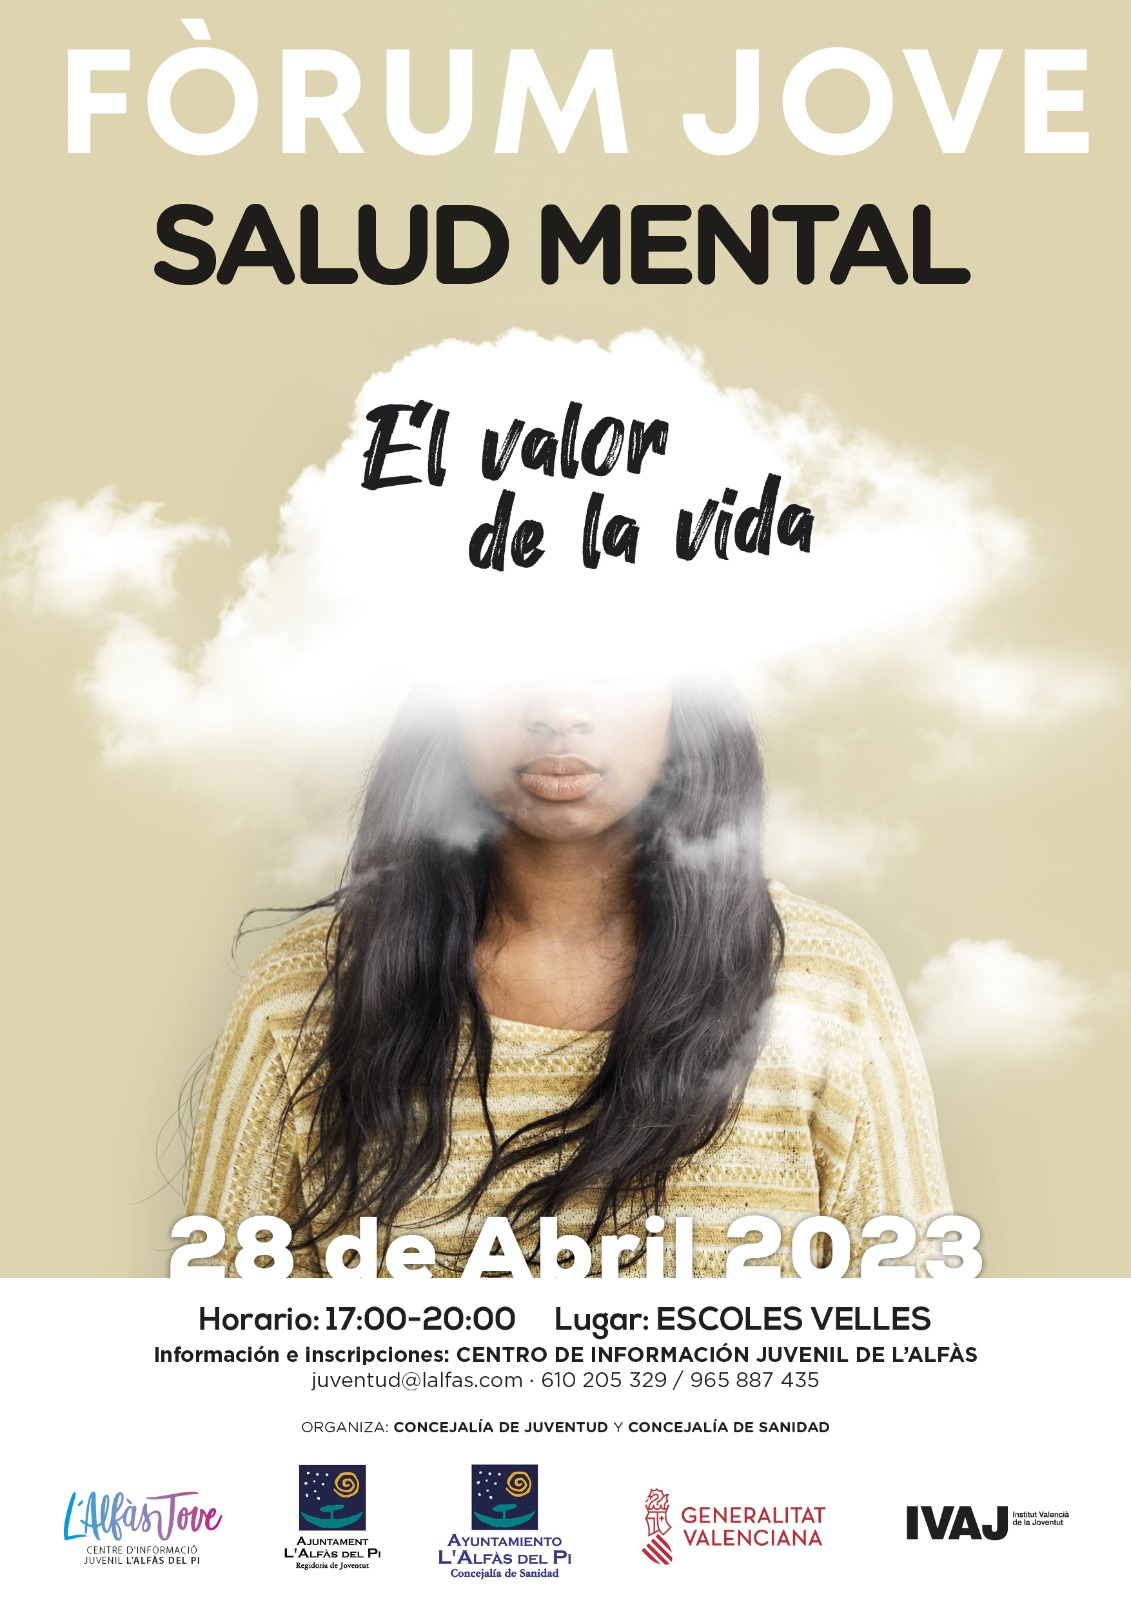 Juventud_foro jove salud mental abril cartel